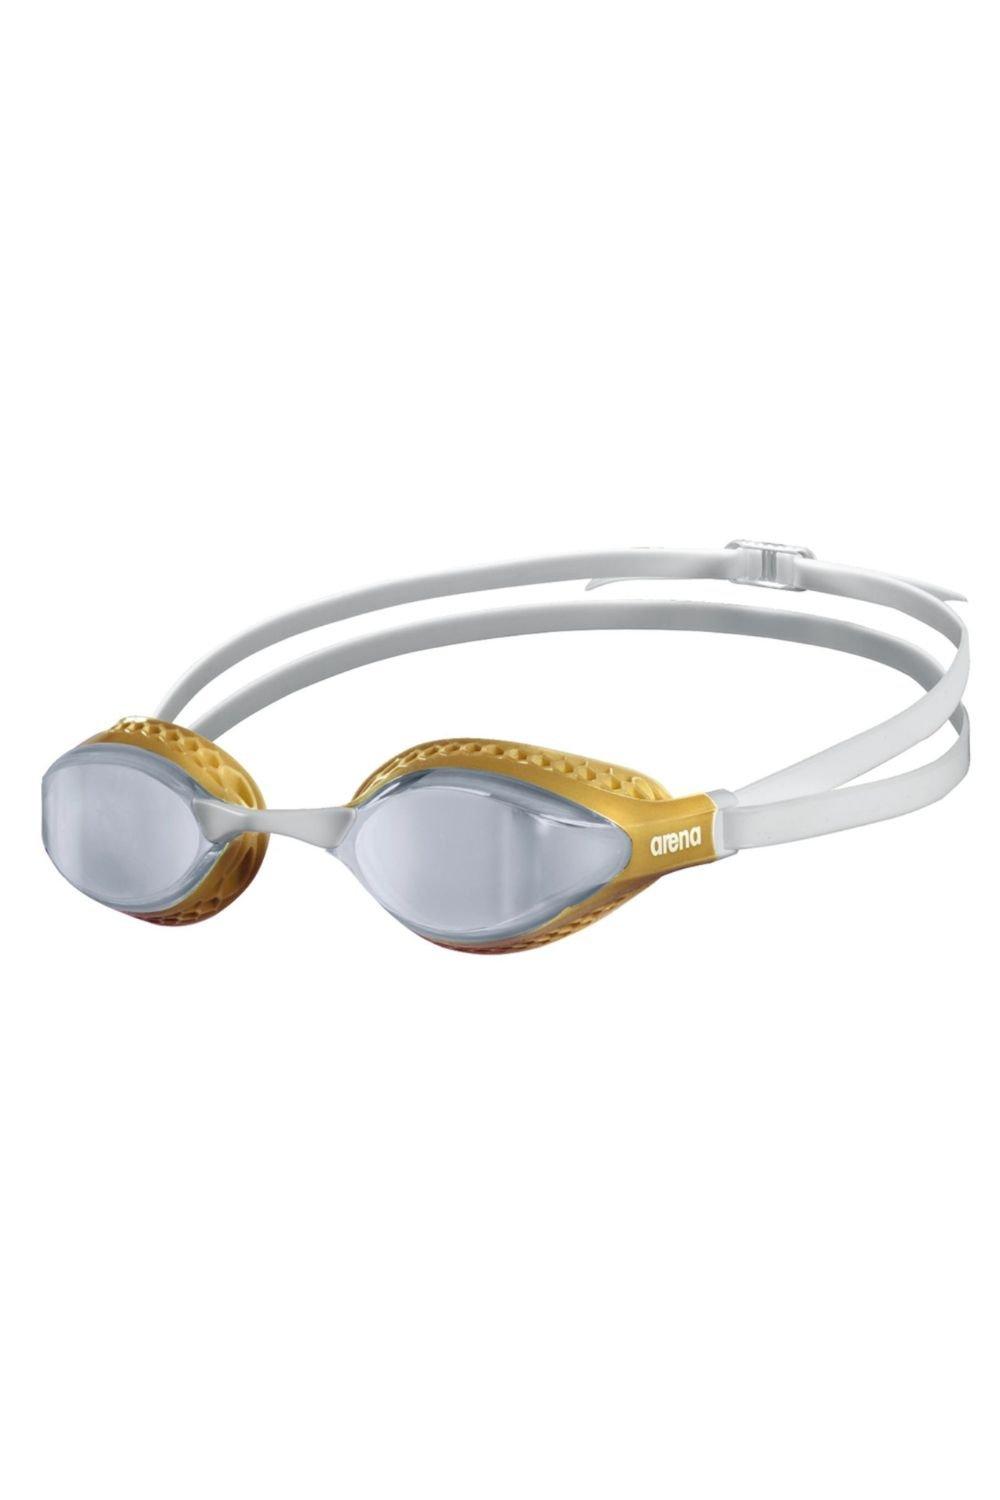 Очки для плавания с зеркалом Airspeed Arena, золото очки для плавания с зеркалом airspeed arena серебро